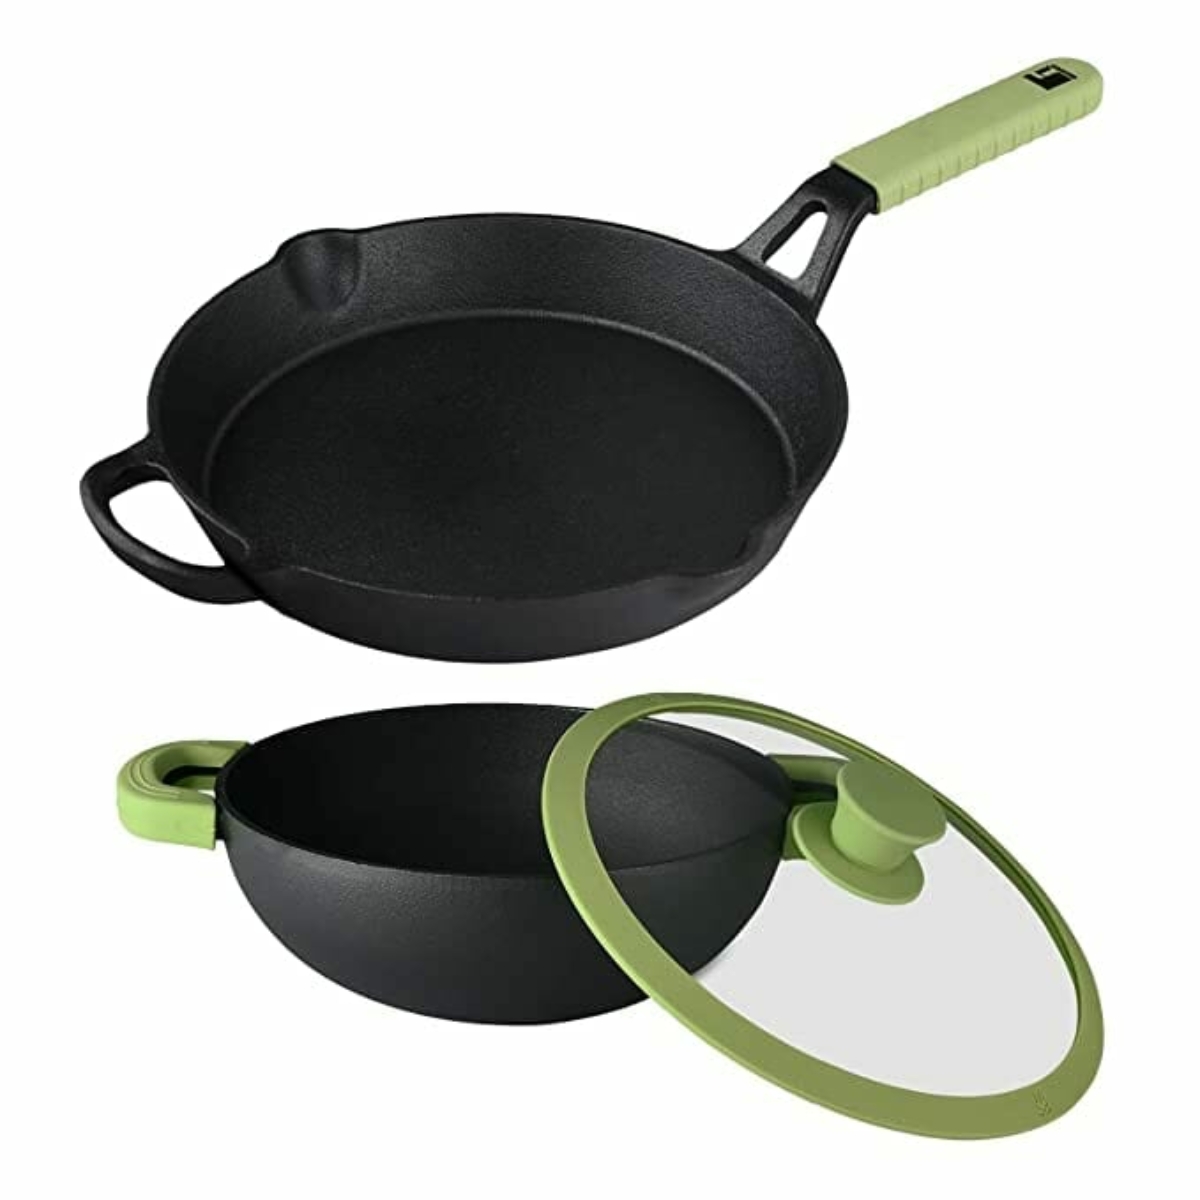 Buy Bergner Non-Stick Cookware Set - Tawa, Kadhai, Fry Pan with